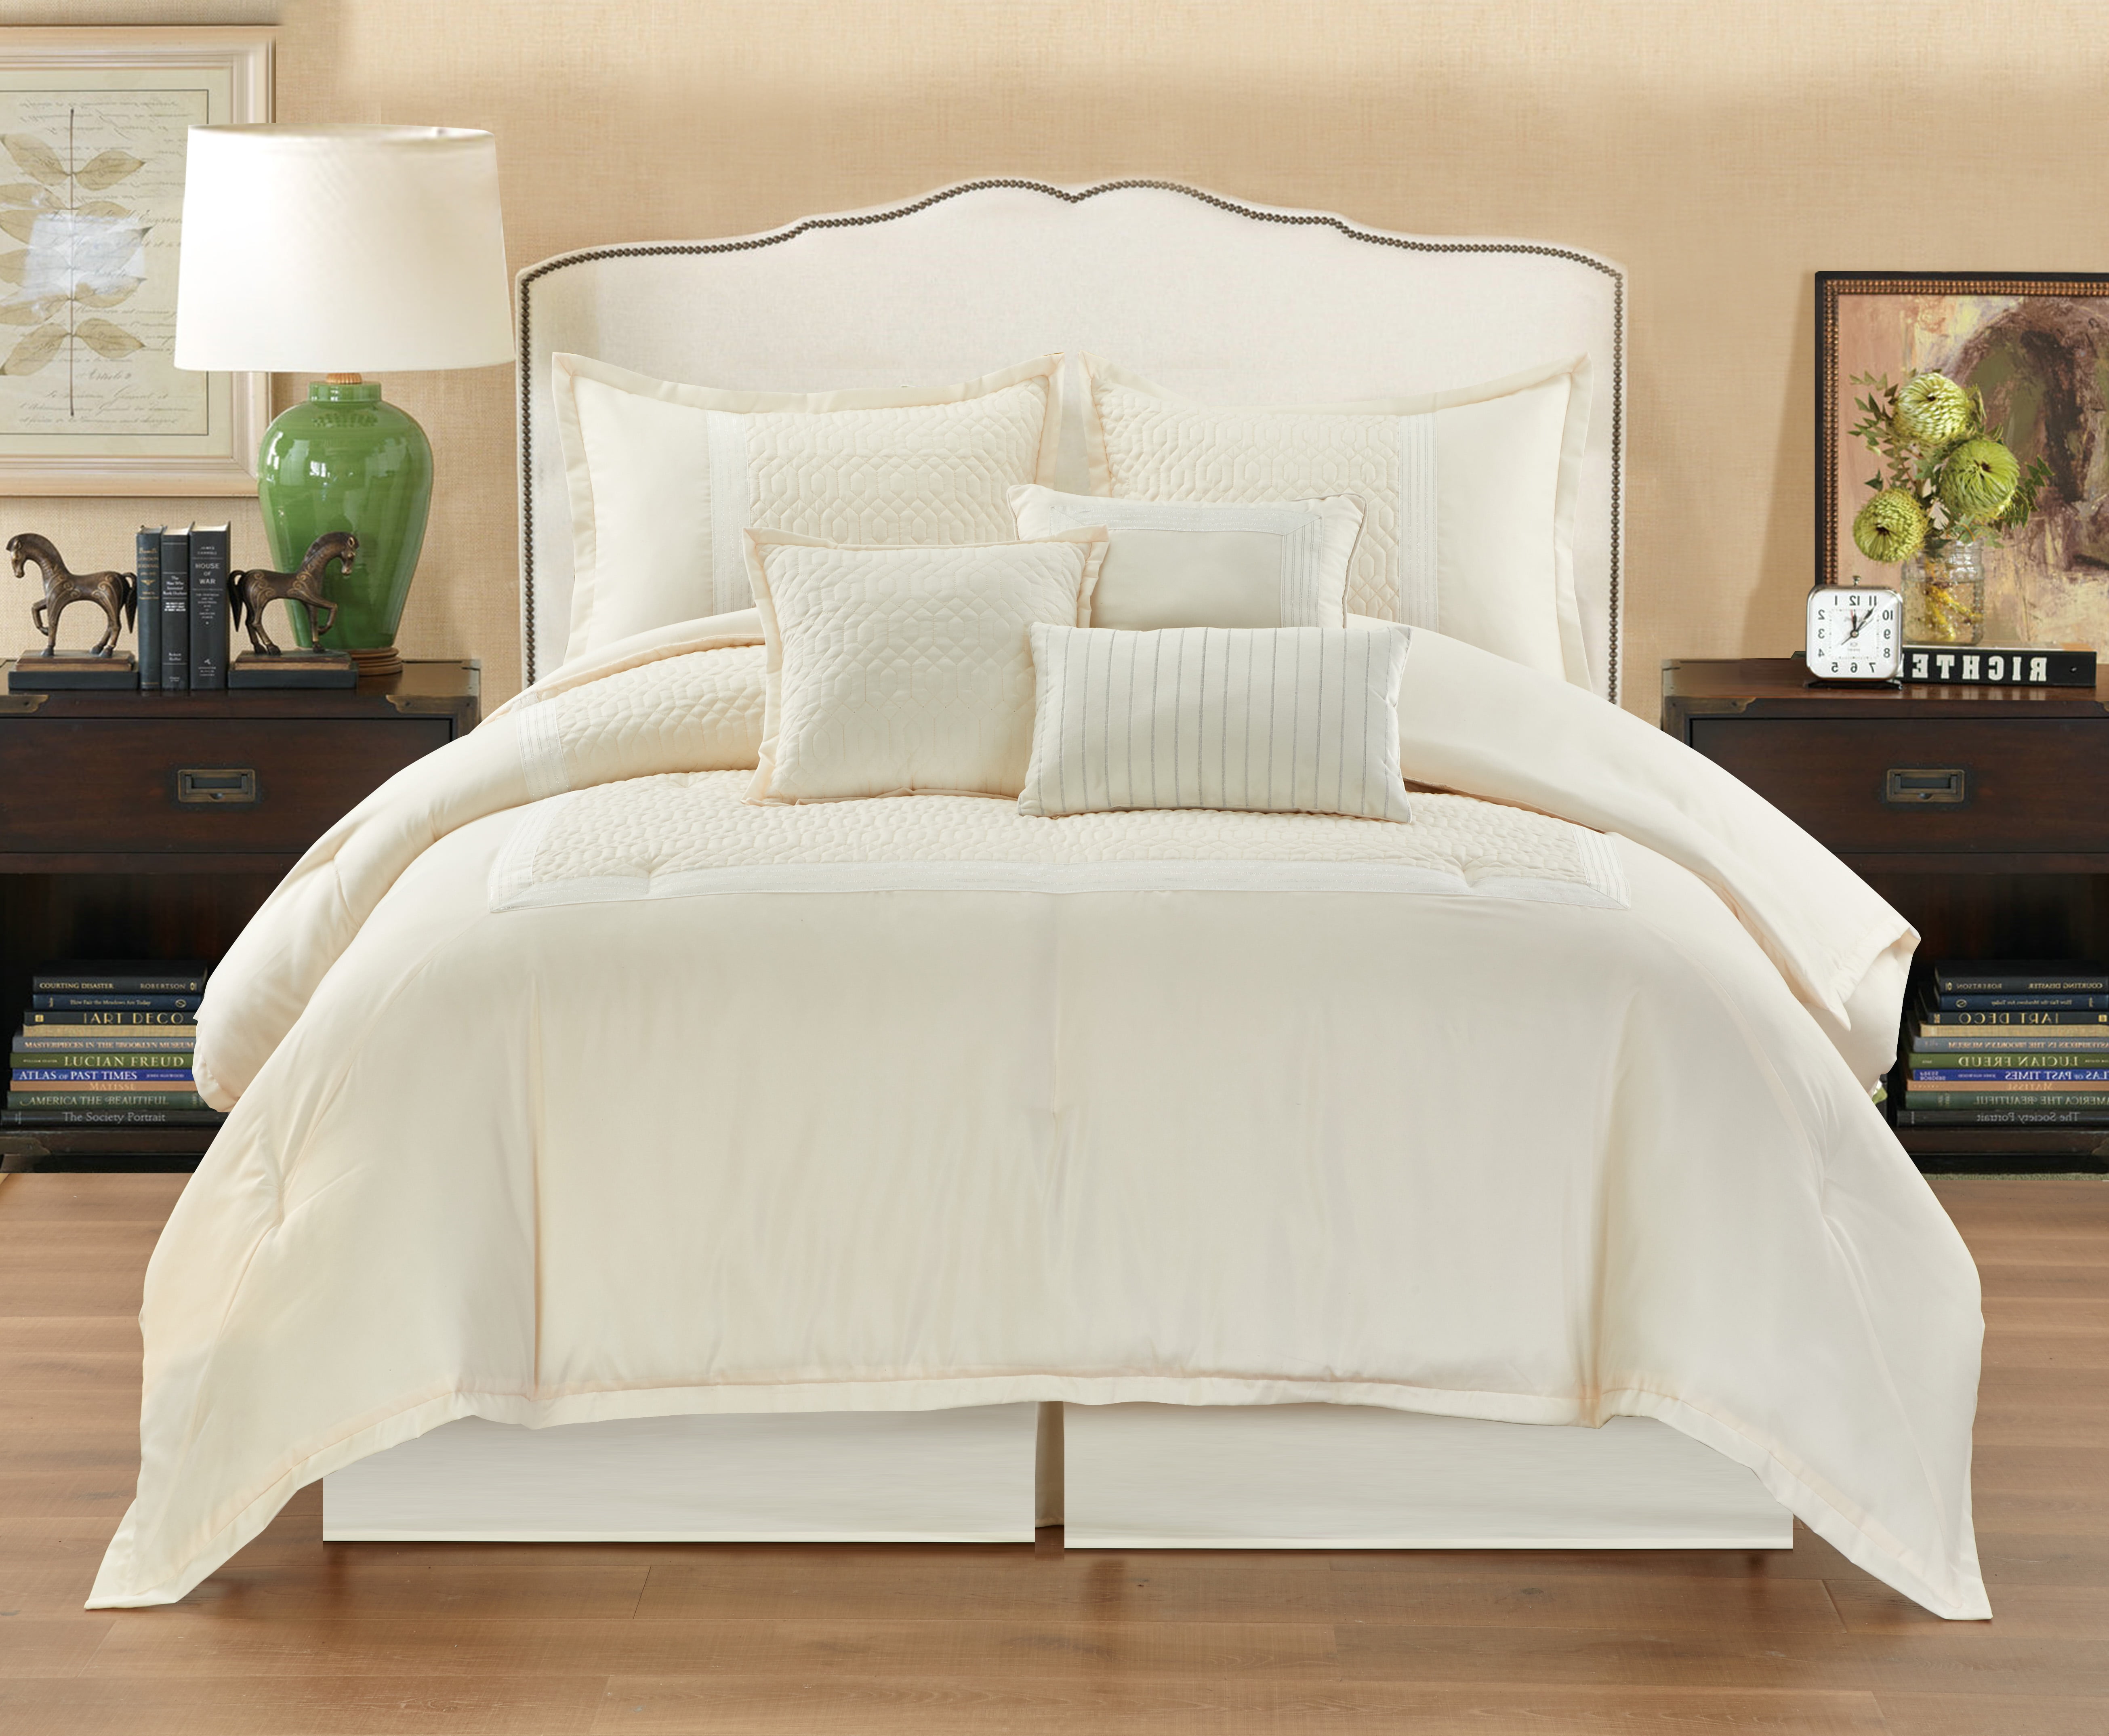 Lanco Home Kathy Brown 7-Piece Comforter Set Bedding Sizes Cal King Full Queen 